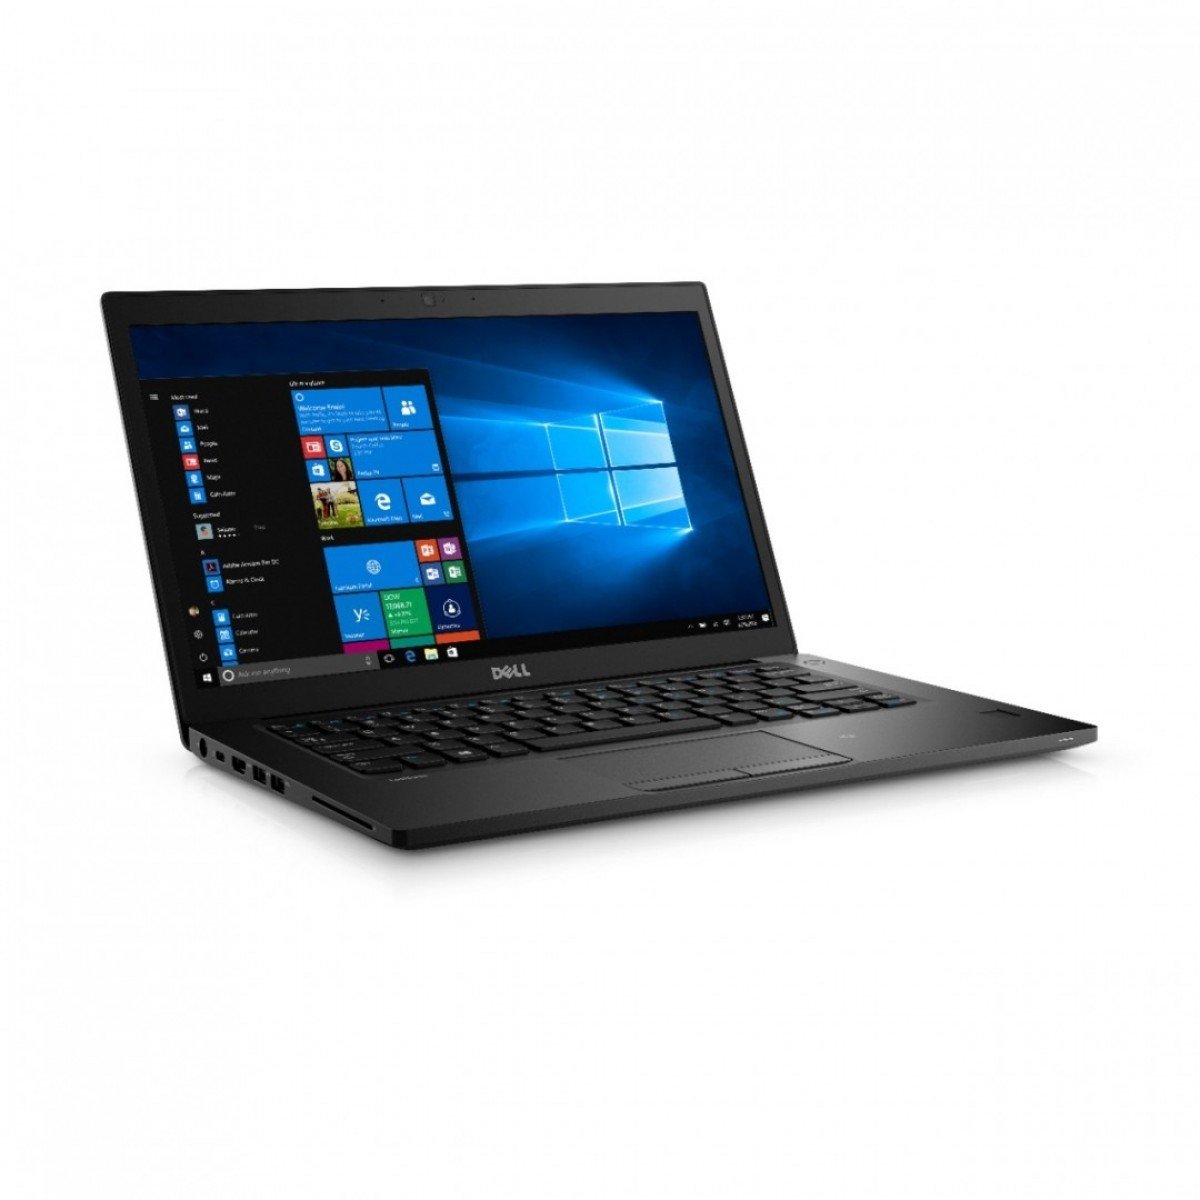 Dell Latitude 7480 Laptop - Intel Core i5-7300U CPU 2.60GHz, 16GB RAM, 256GB SSD, 14 HD Display, Webcam, Windows 10 Pro (Renewed)